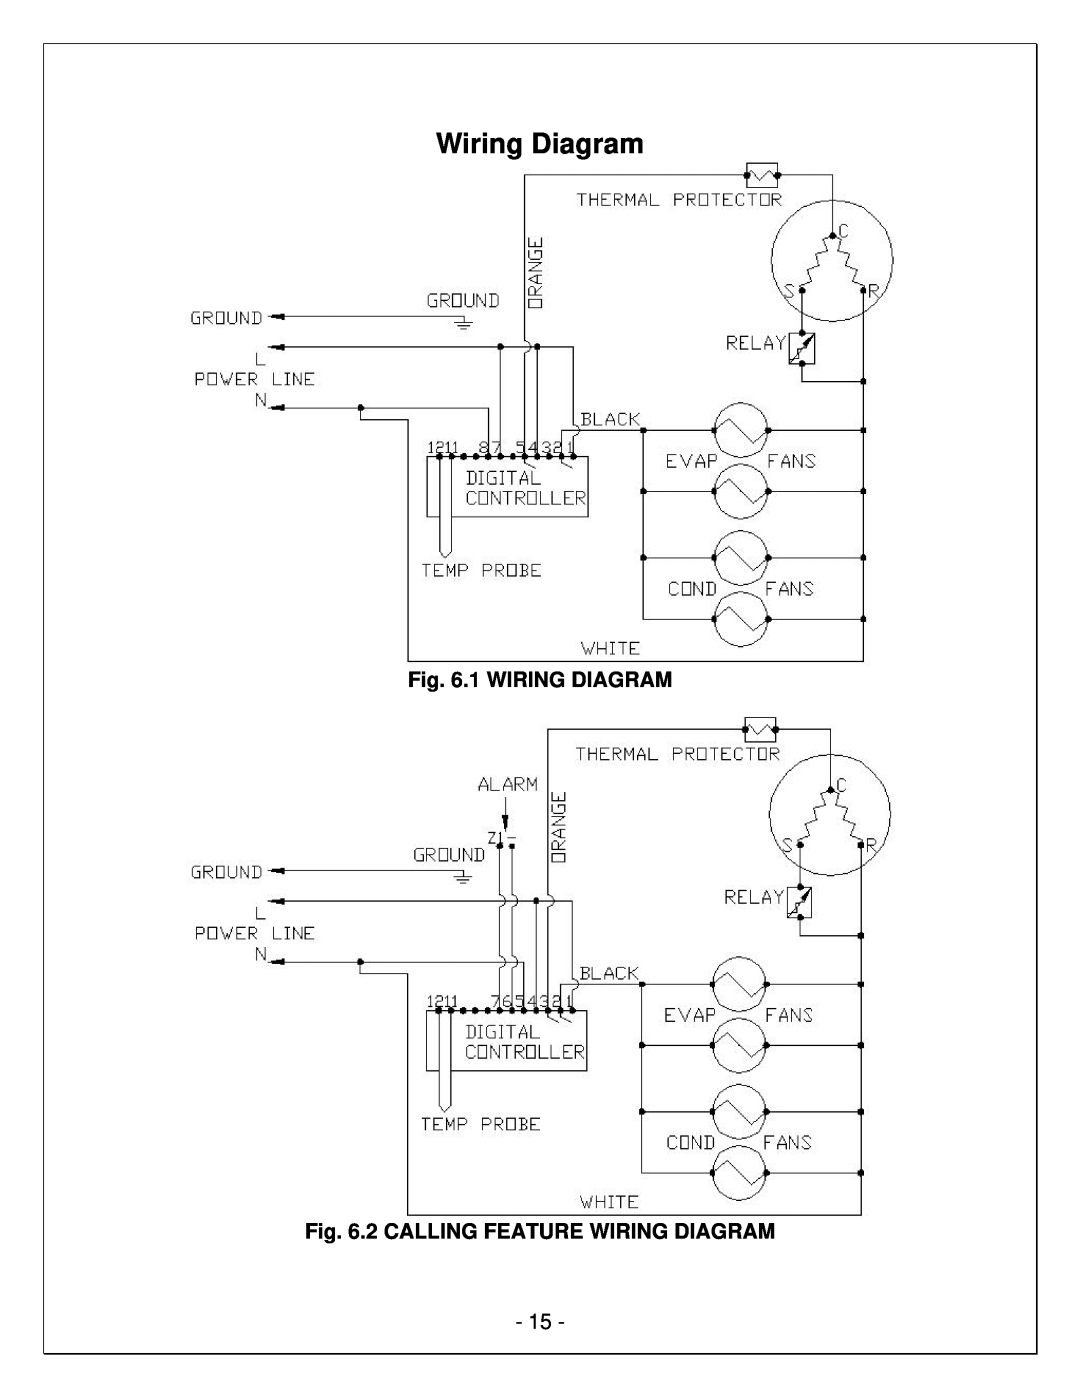 Vinotemp VINO1500CTED, VINO-4500SSR, WM-2500CD manual Wiring Diagram, 1 WIRING DIAGRAM .2 CALLING FEATURE WIRING DIAGRAM 